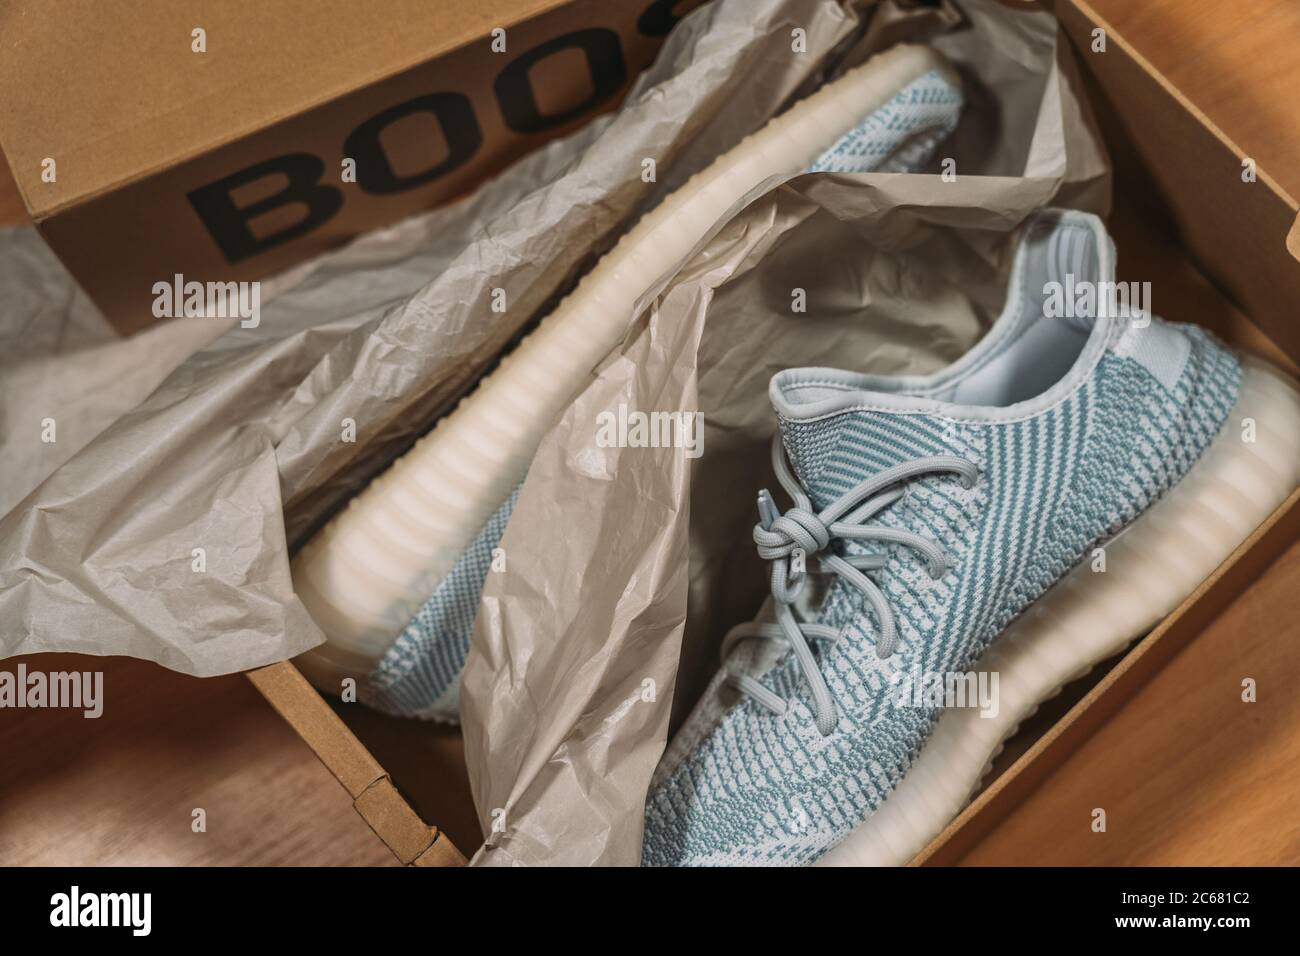 Moskau, Russland - Juni 2020 : Adidas Yeezy Boost 350 V2 - berühmte Limited Collection Fashion Sneakers von Kanye West und Adidas Collaboration. Stockfoto